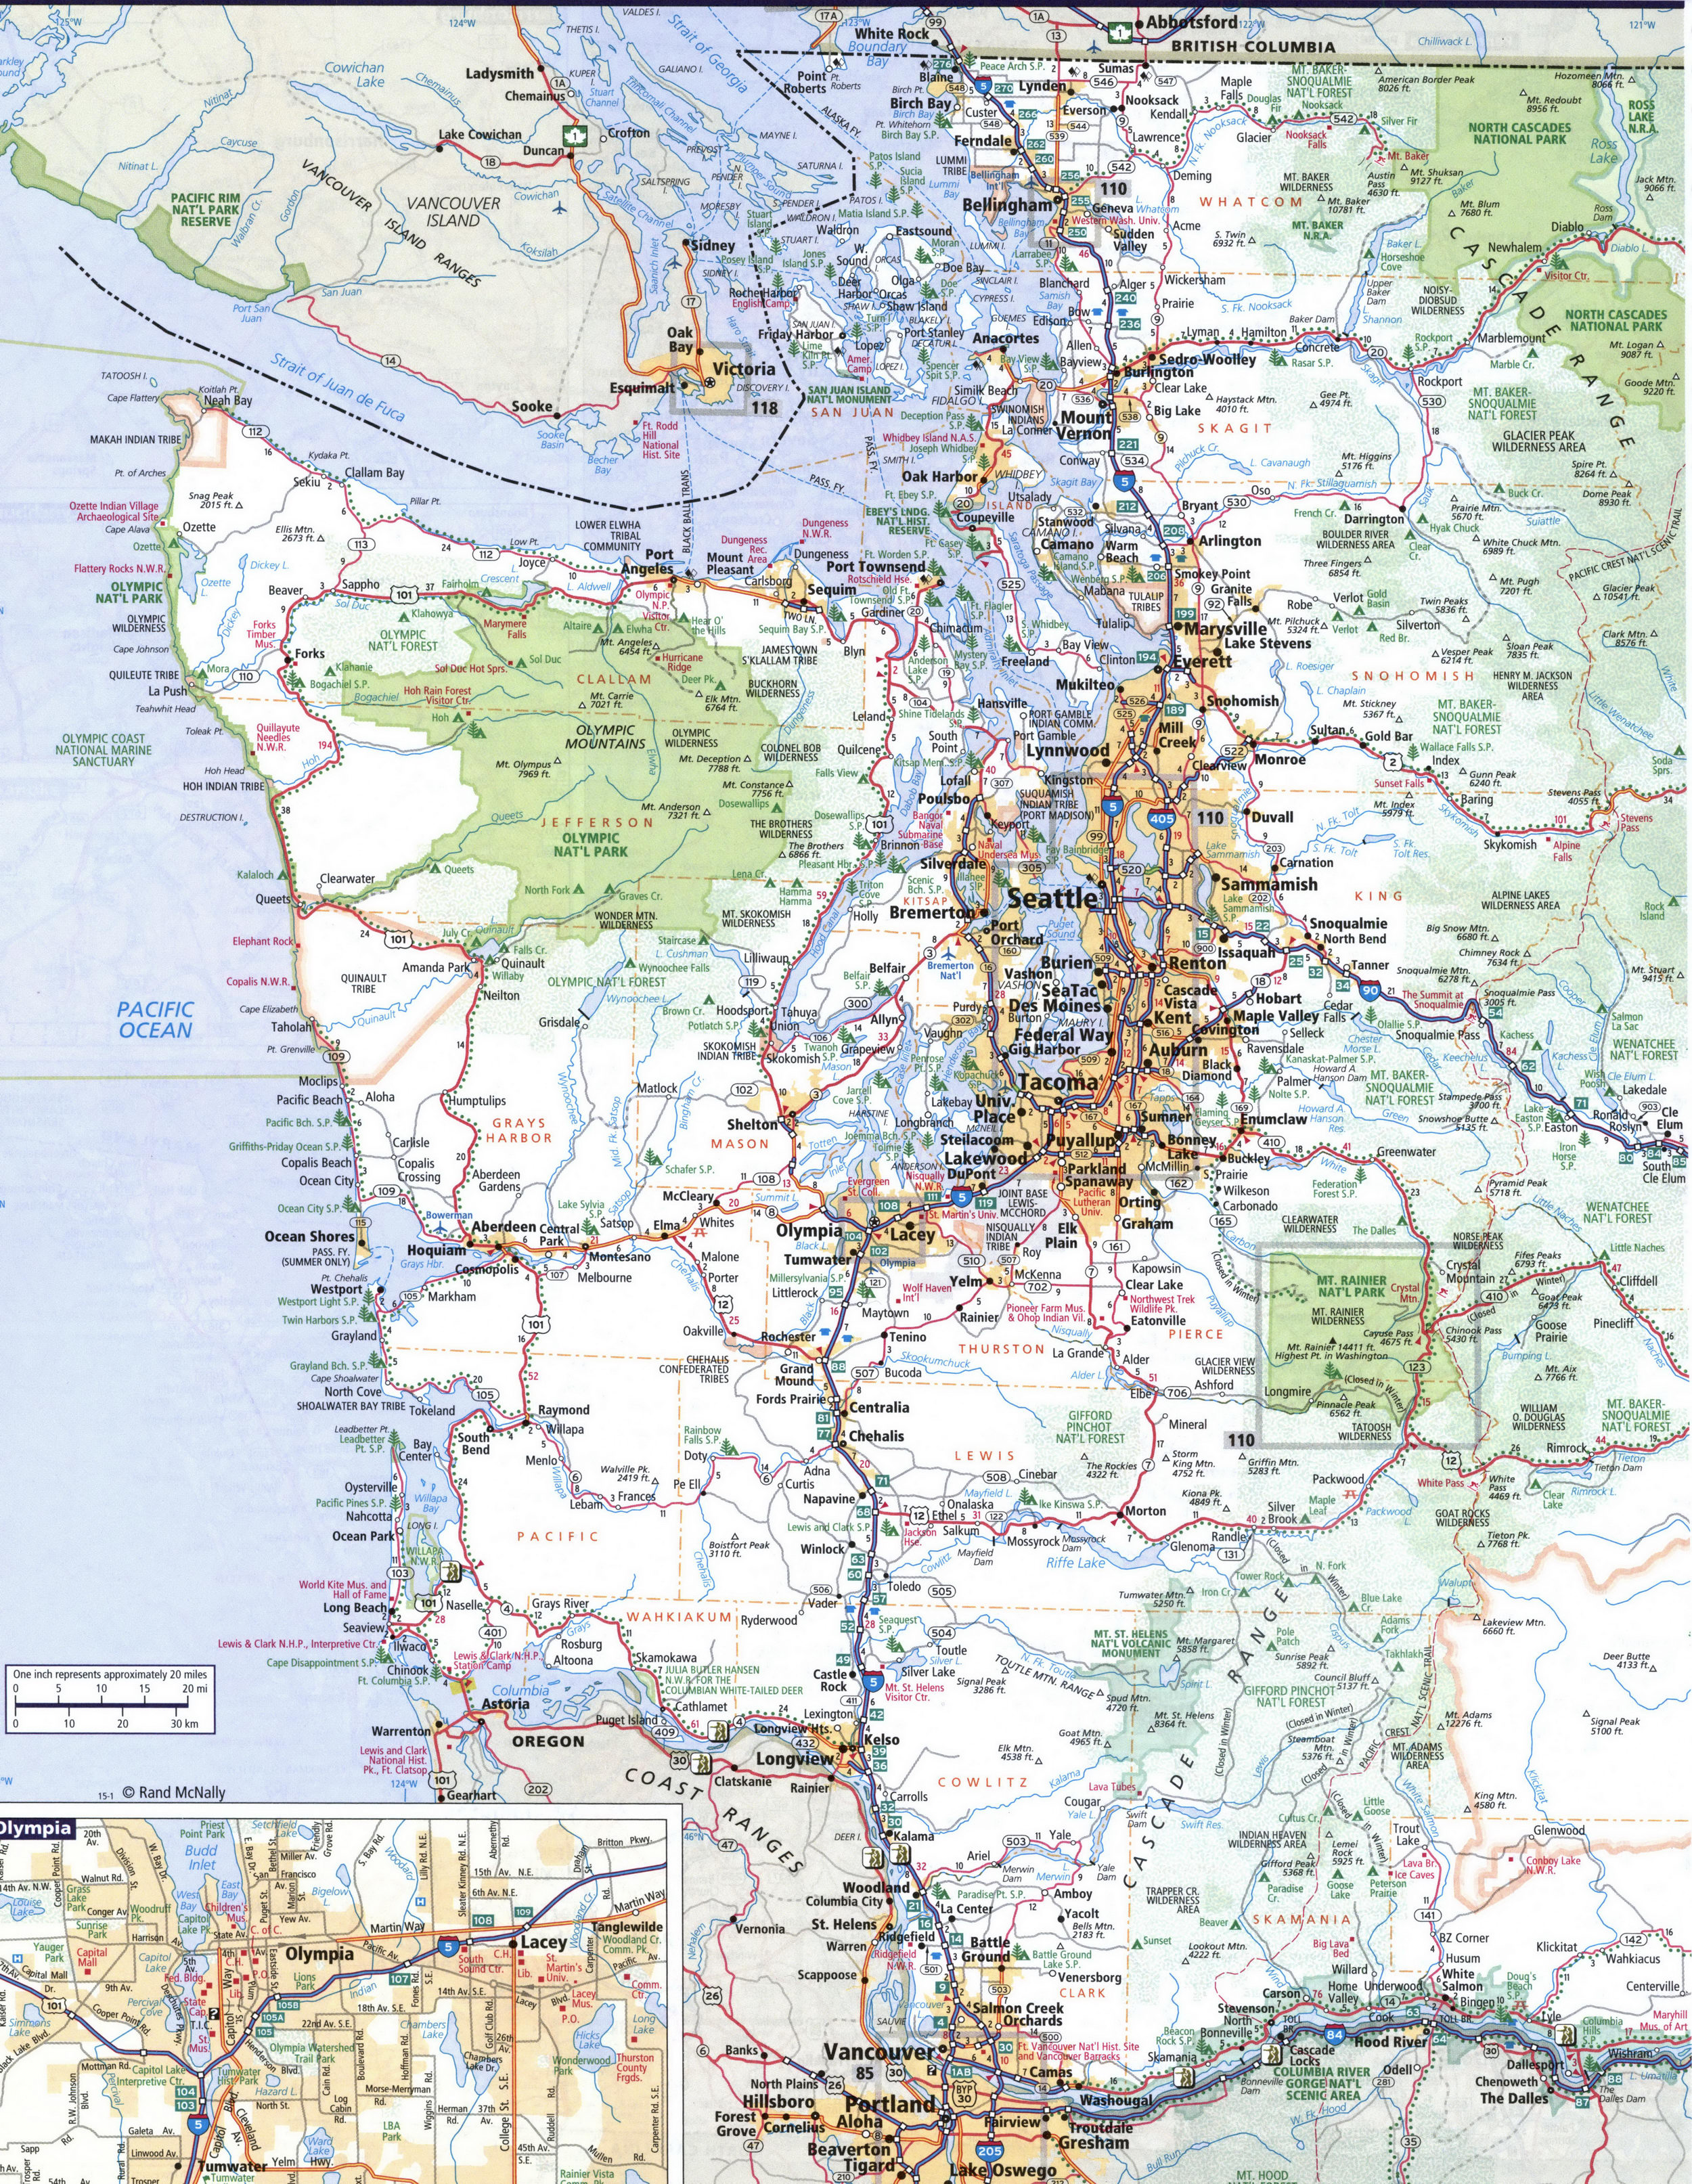 Map of Washington state western path